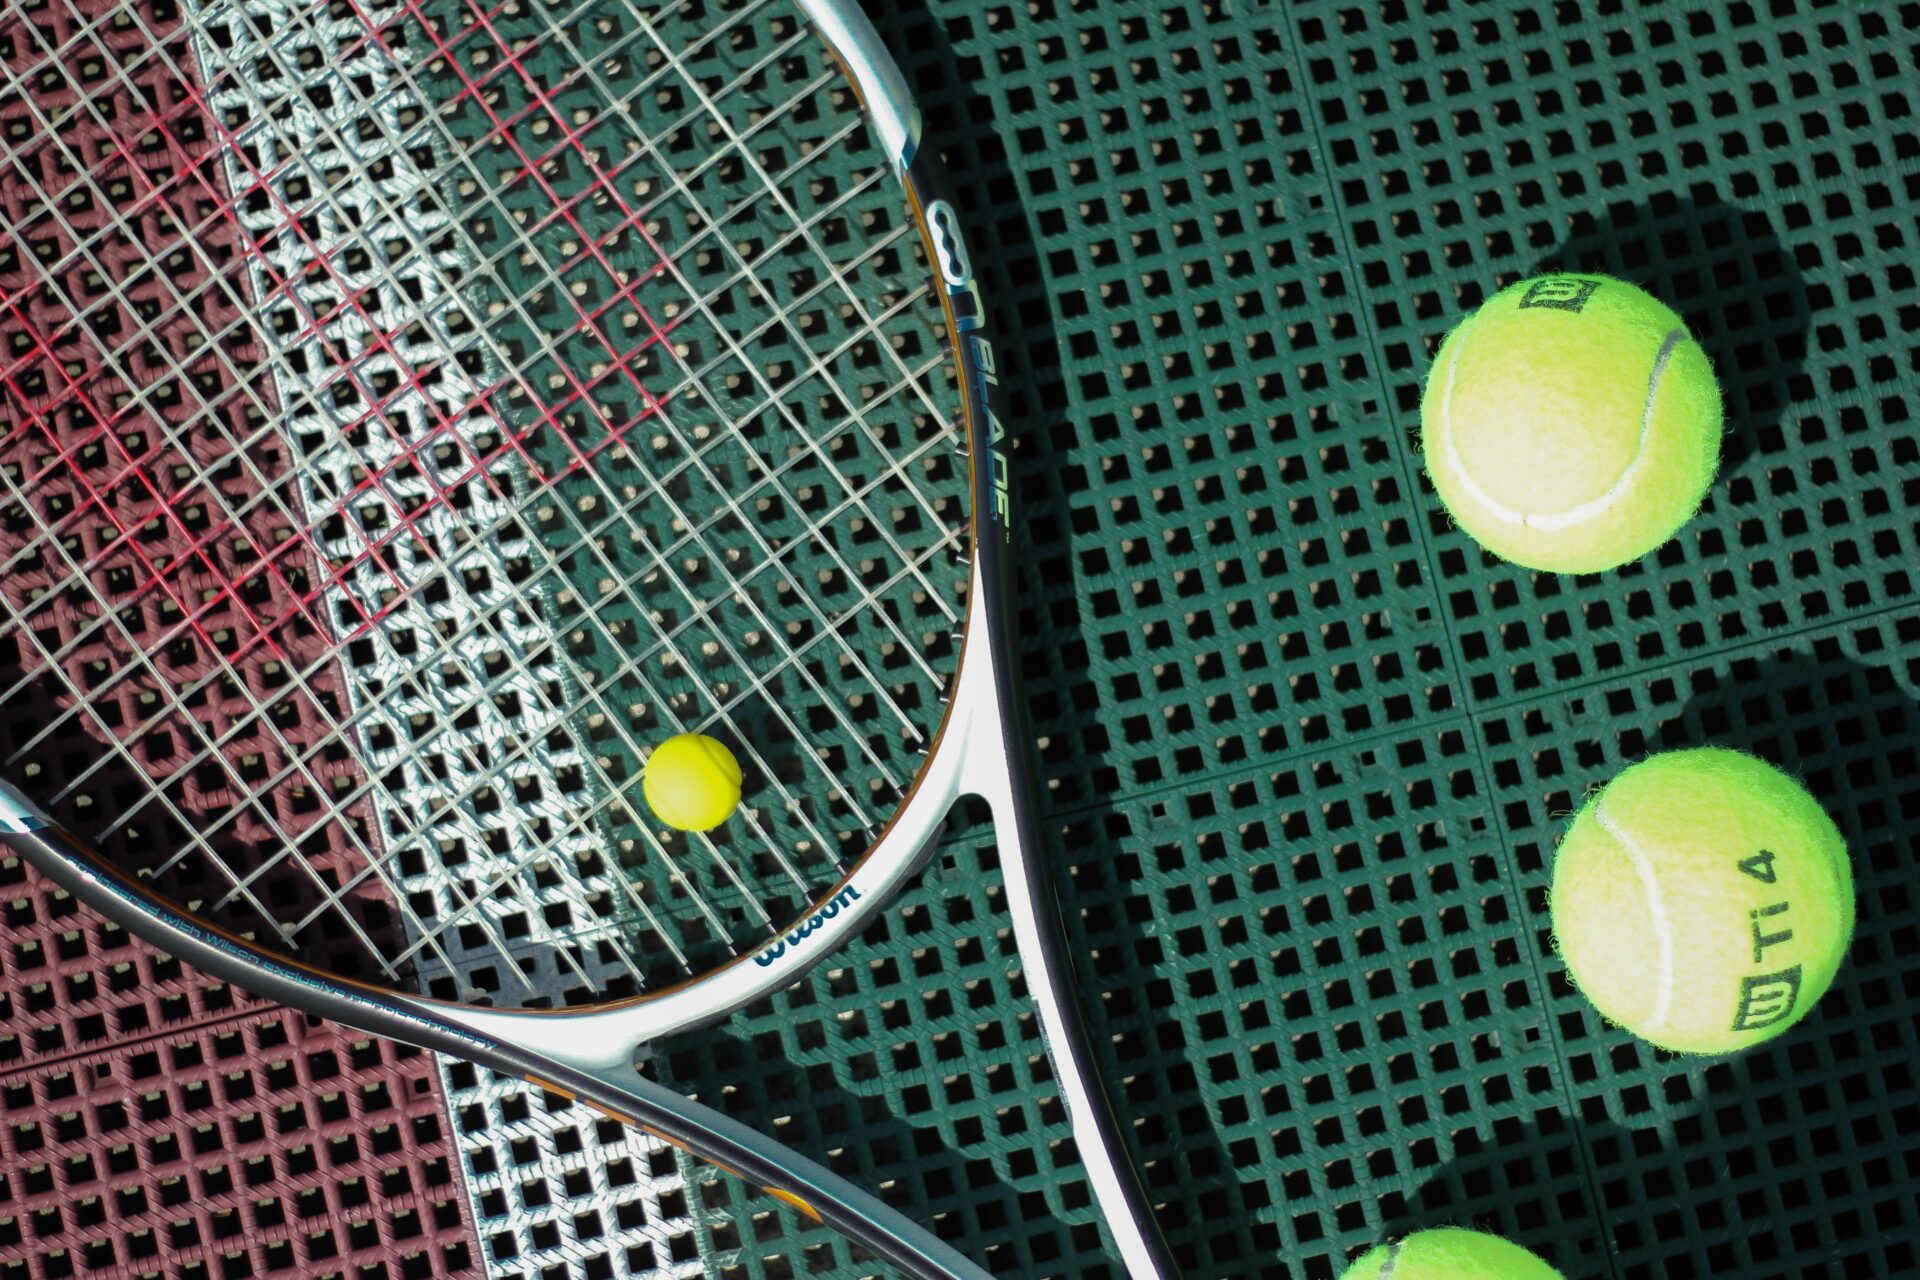 A tennis racket wiith some tennis balls.